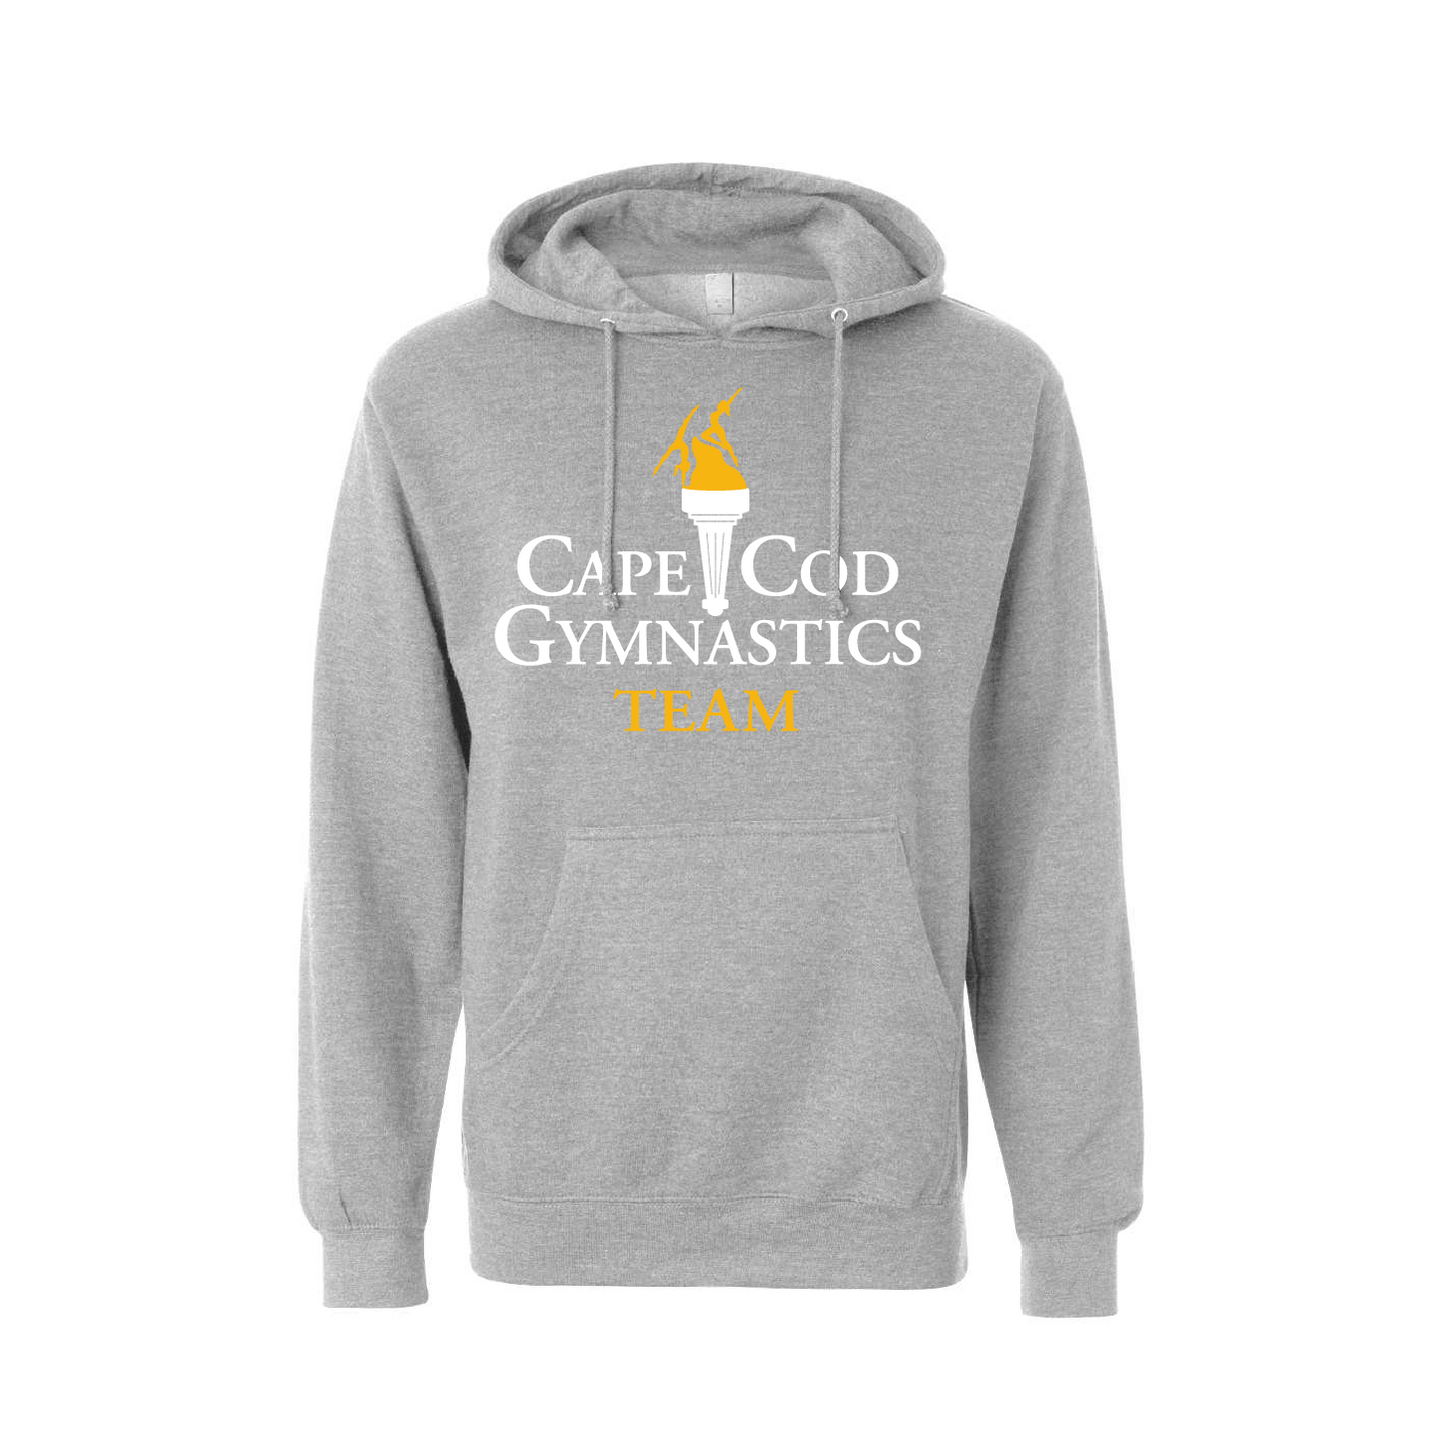 CCG - Team Midweight Hooded Sweatshirt